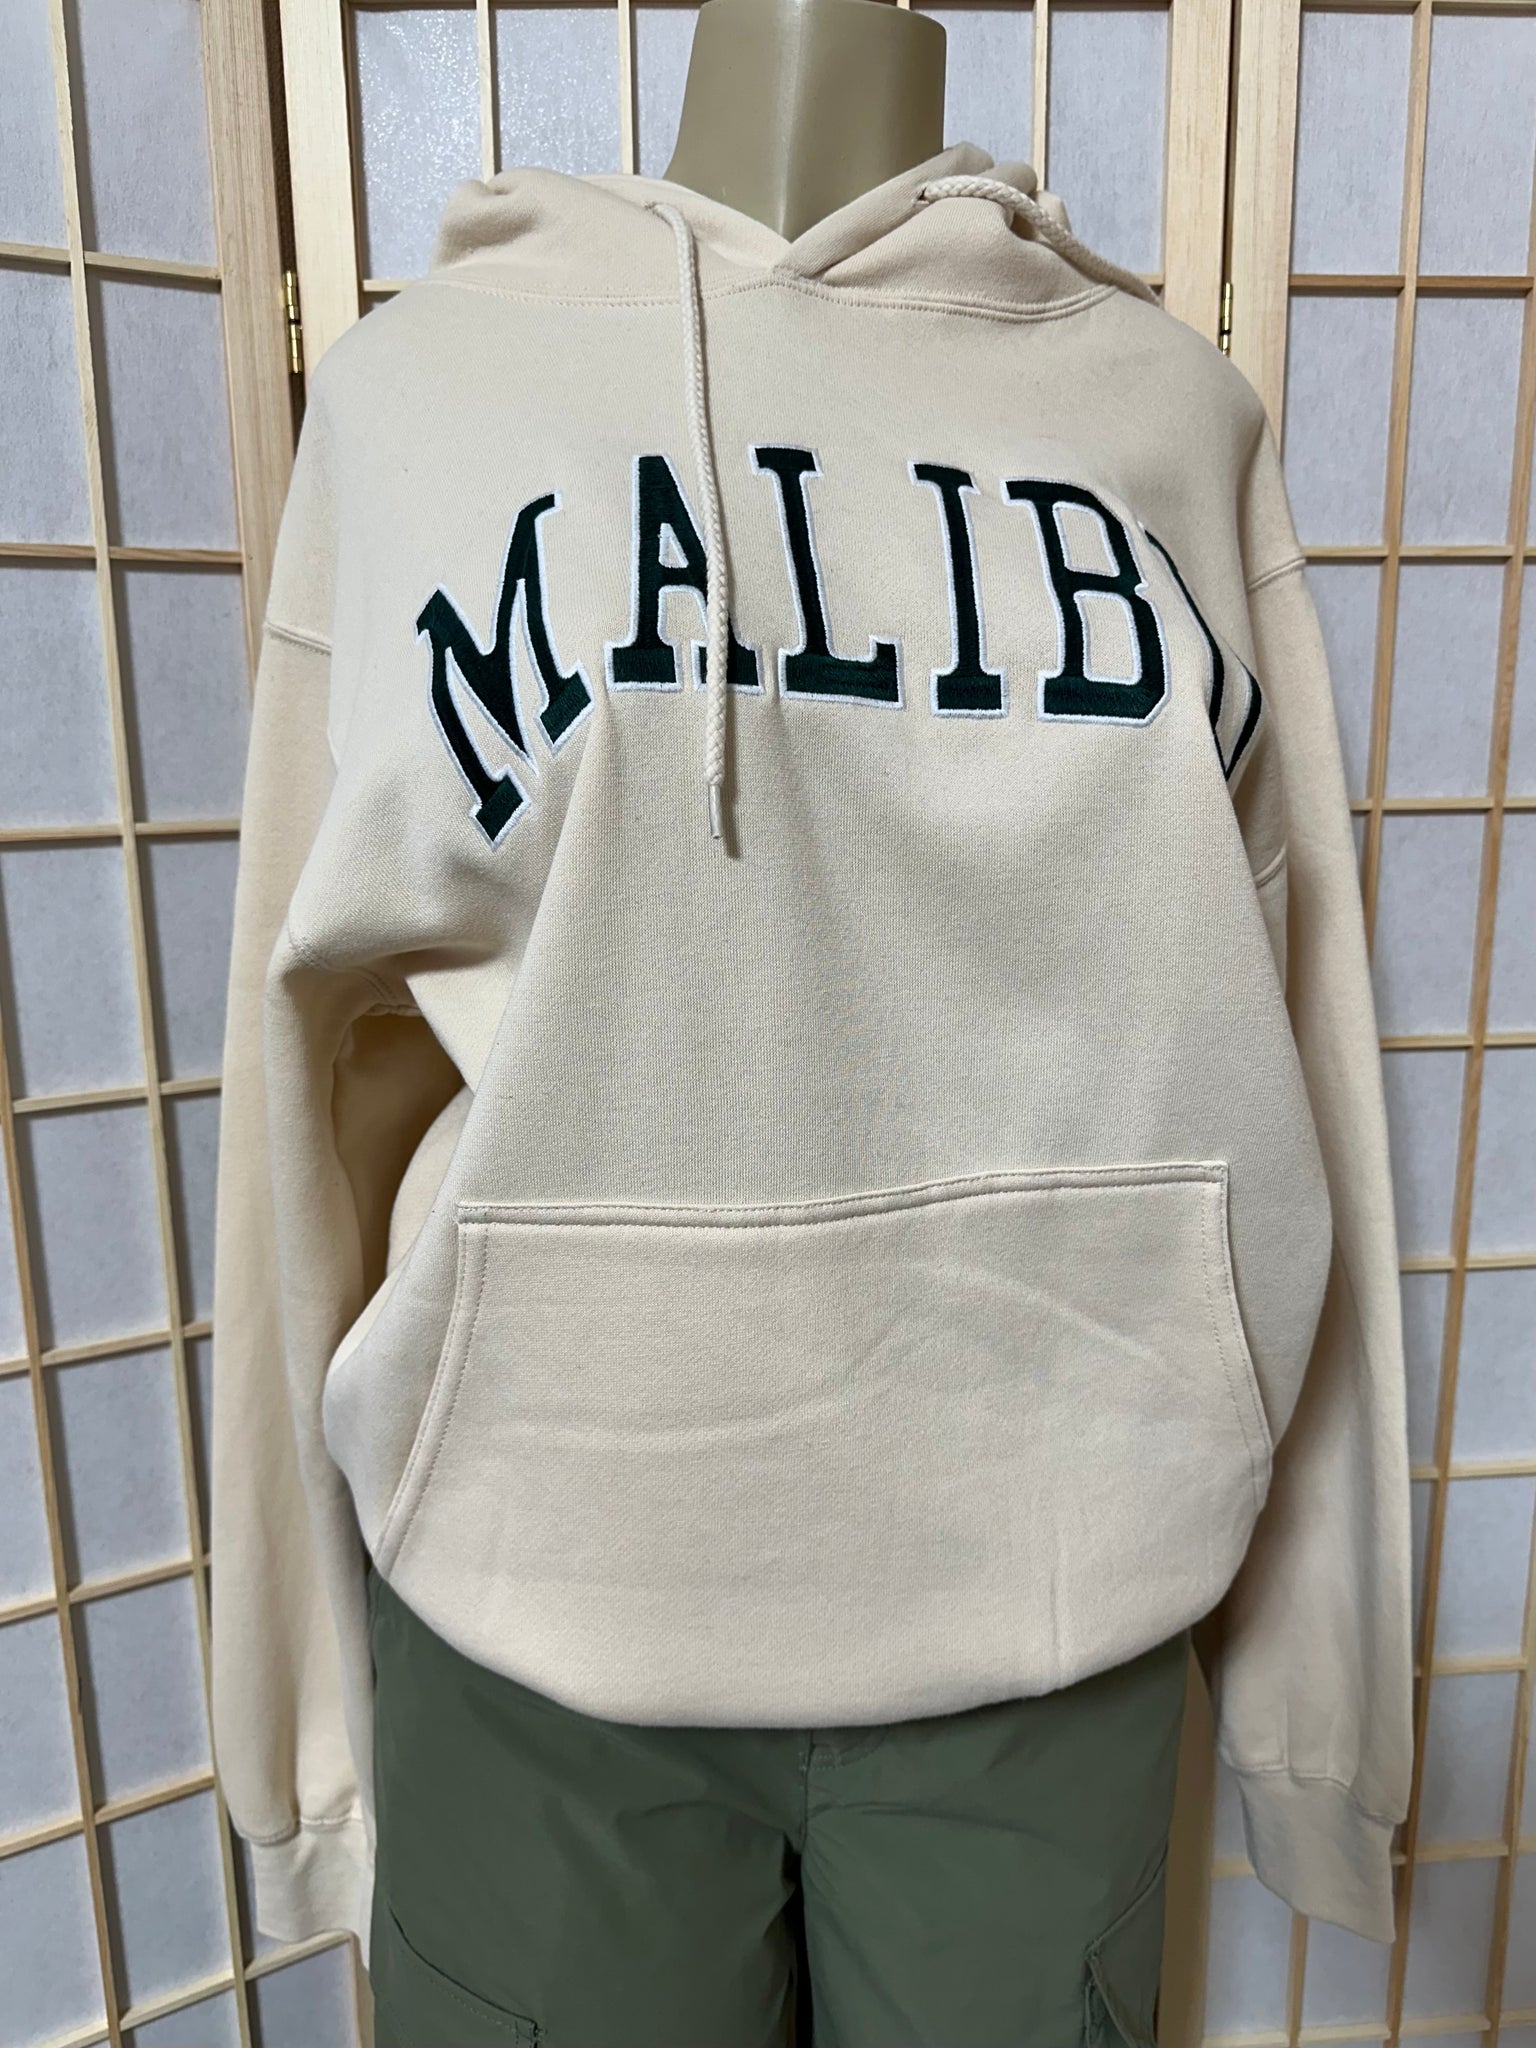 The “Malibu” Embroidered Hoodie